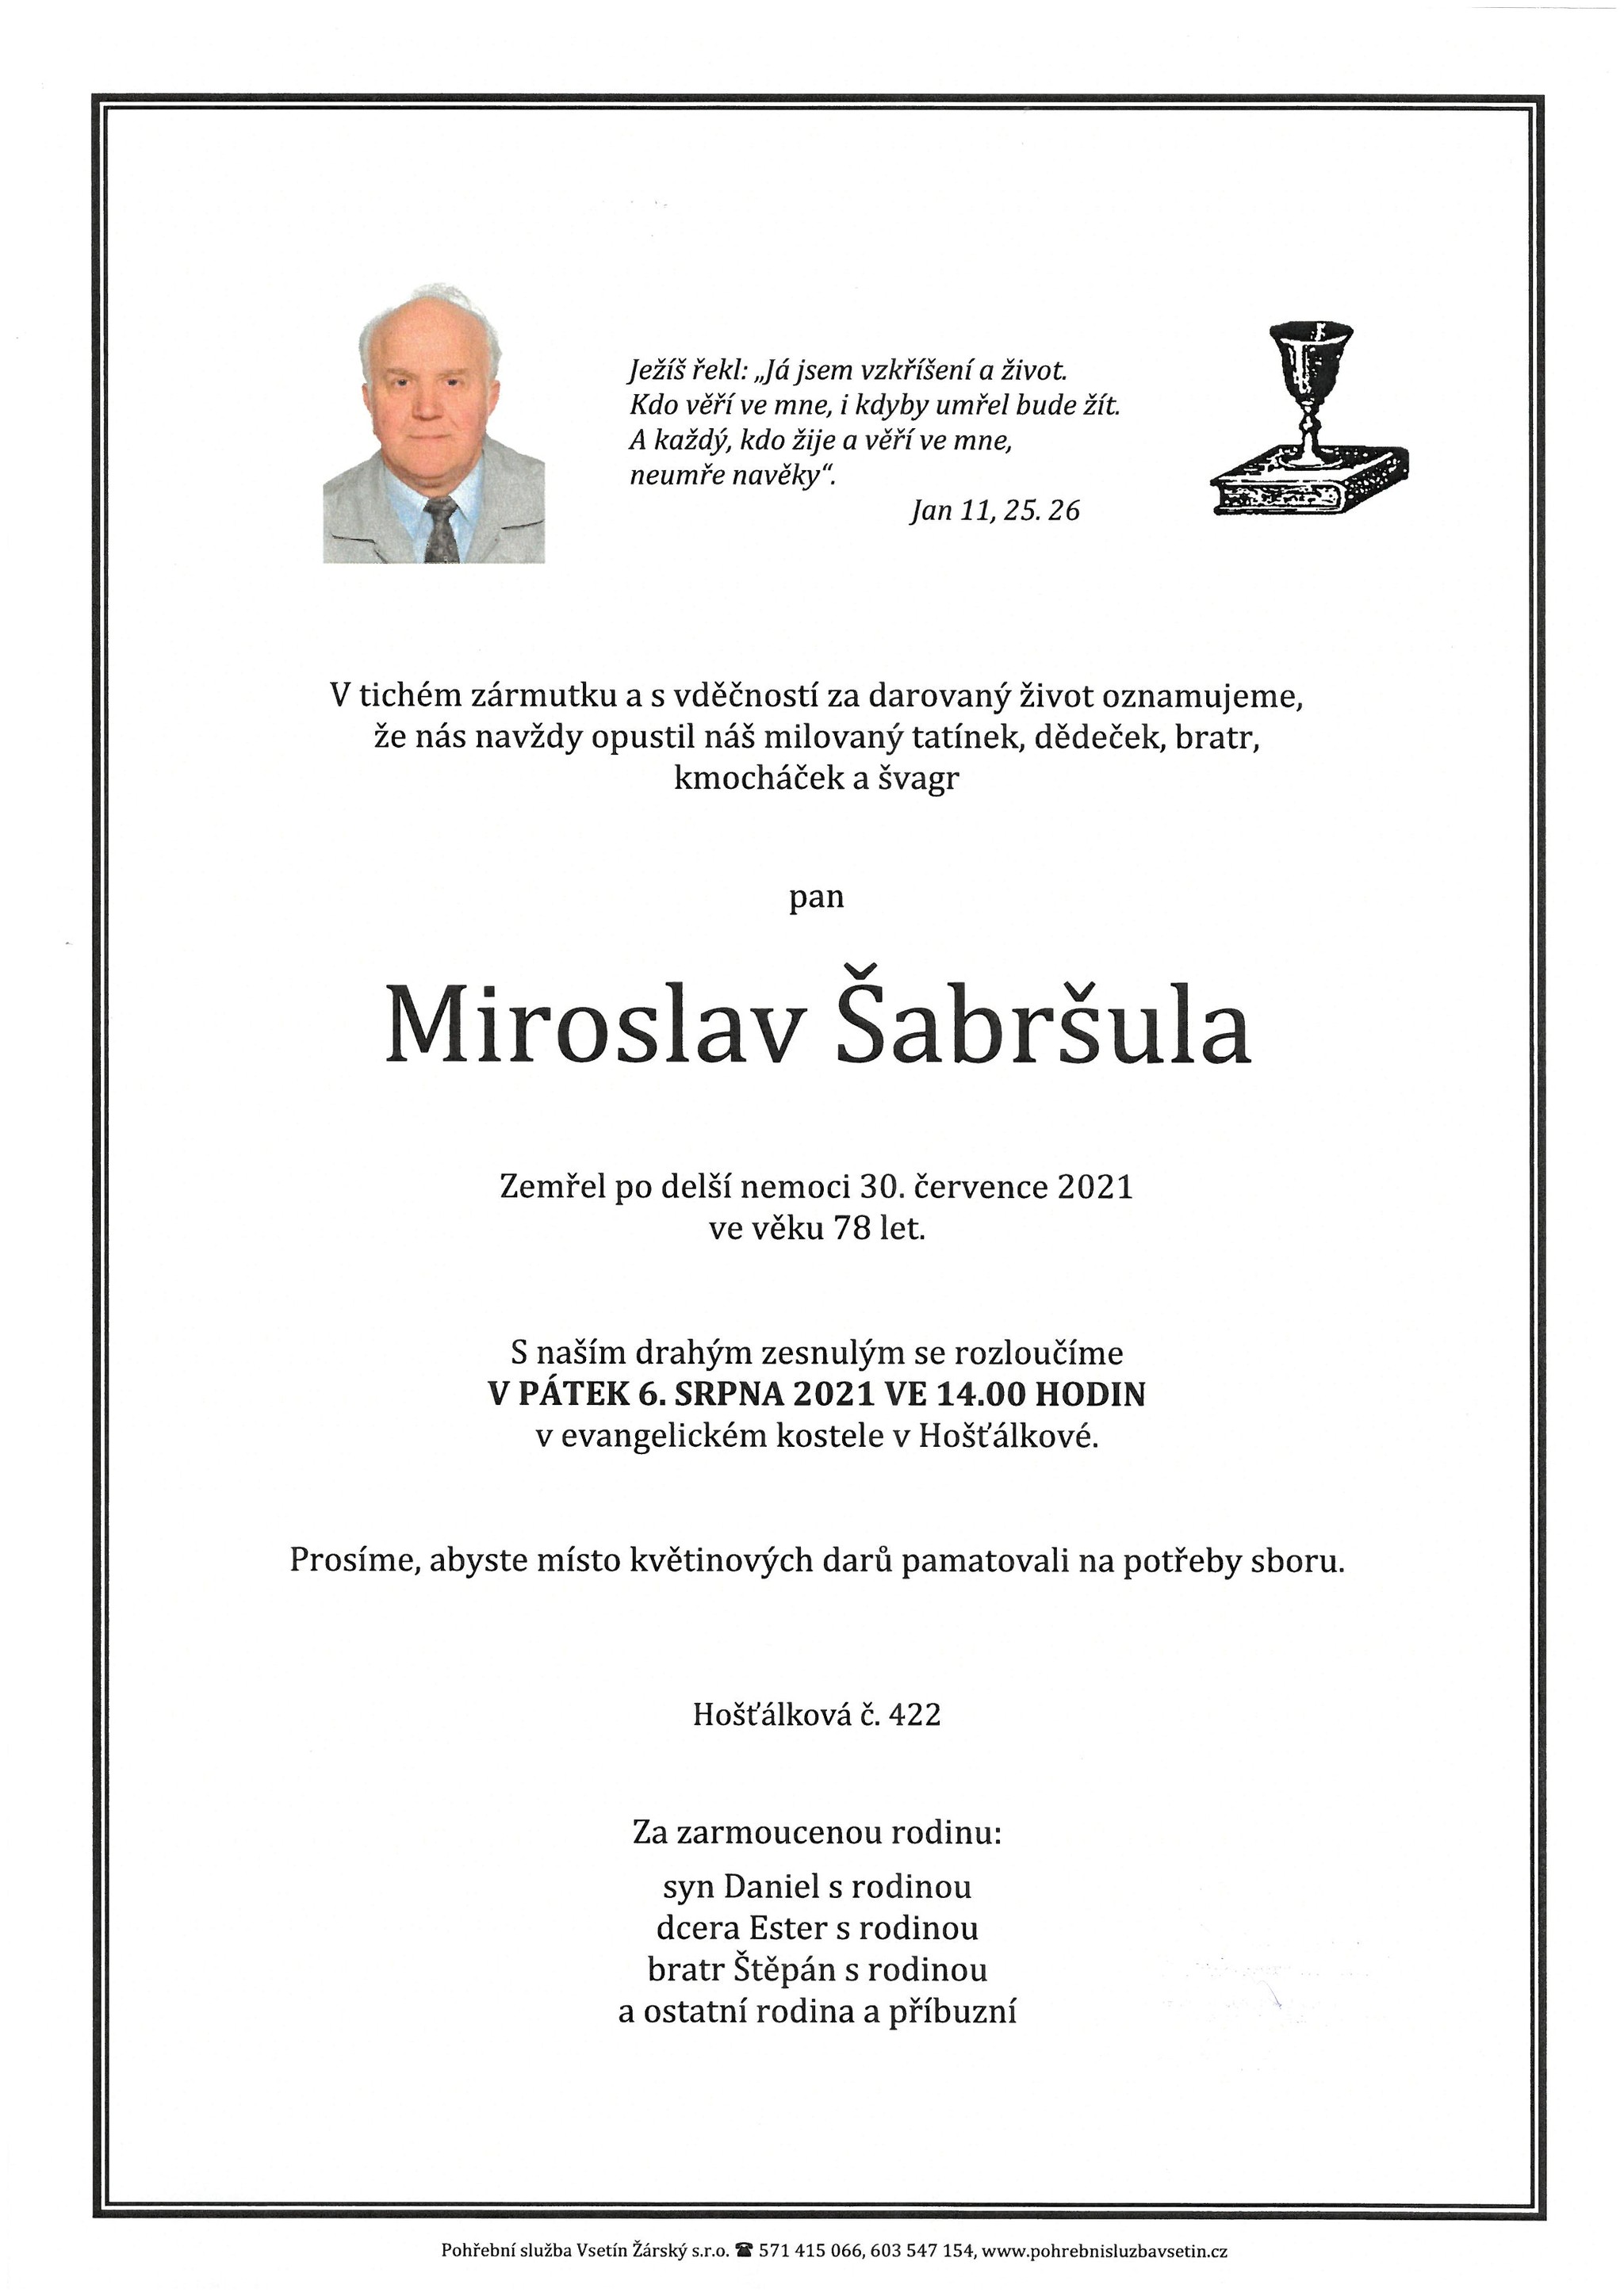 Miroslav Šabršula